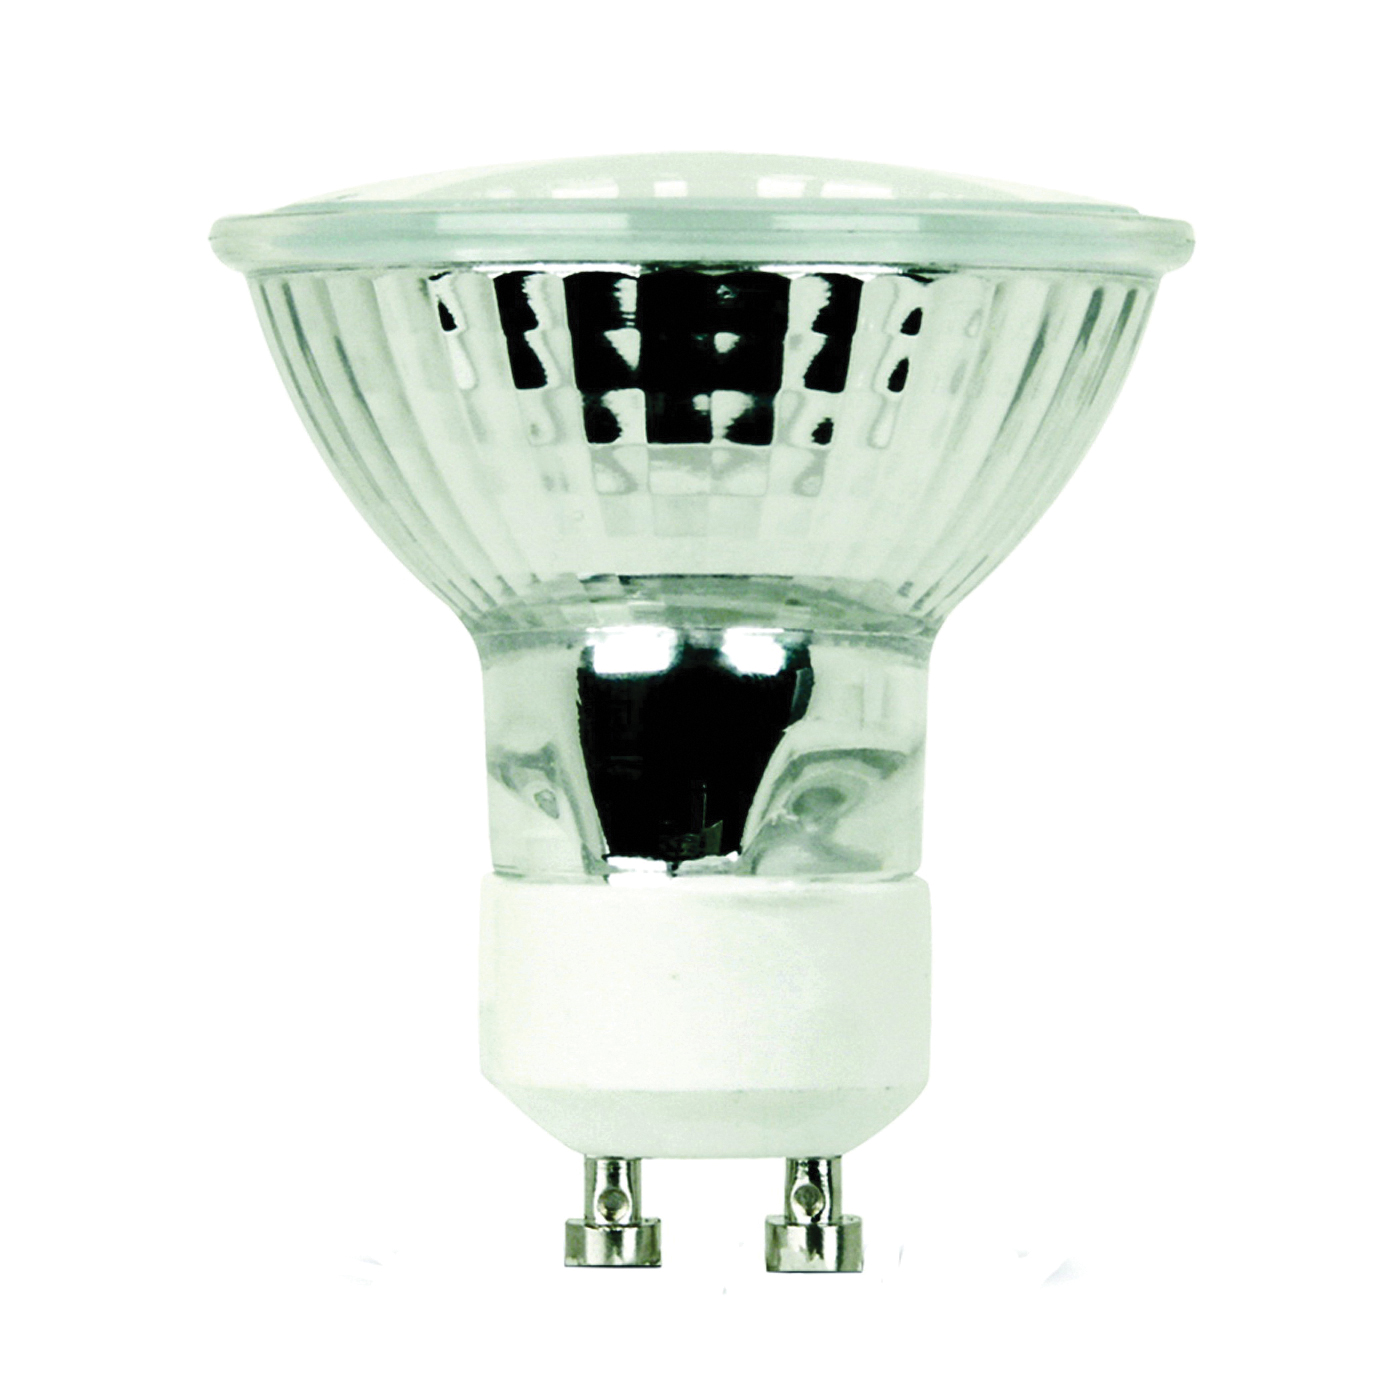 BPQ50MR16/GU10/3 Halogen Bulb, 50 W, GU10 Lamp Base, MR16 Lamp, 3000 K Color Temp, 2000 hr Average Life